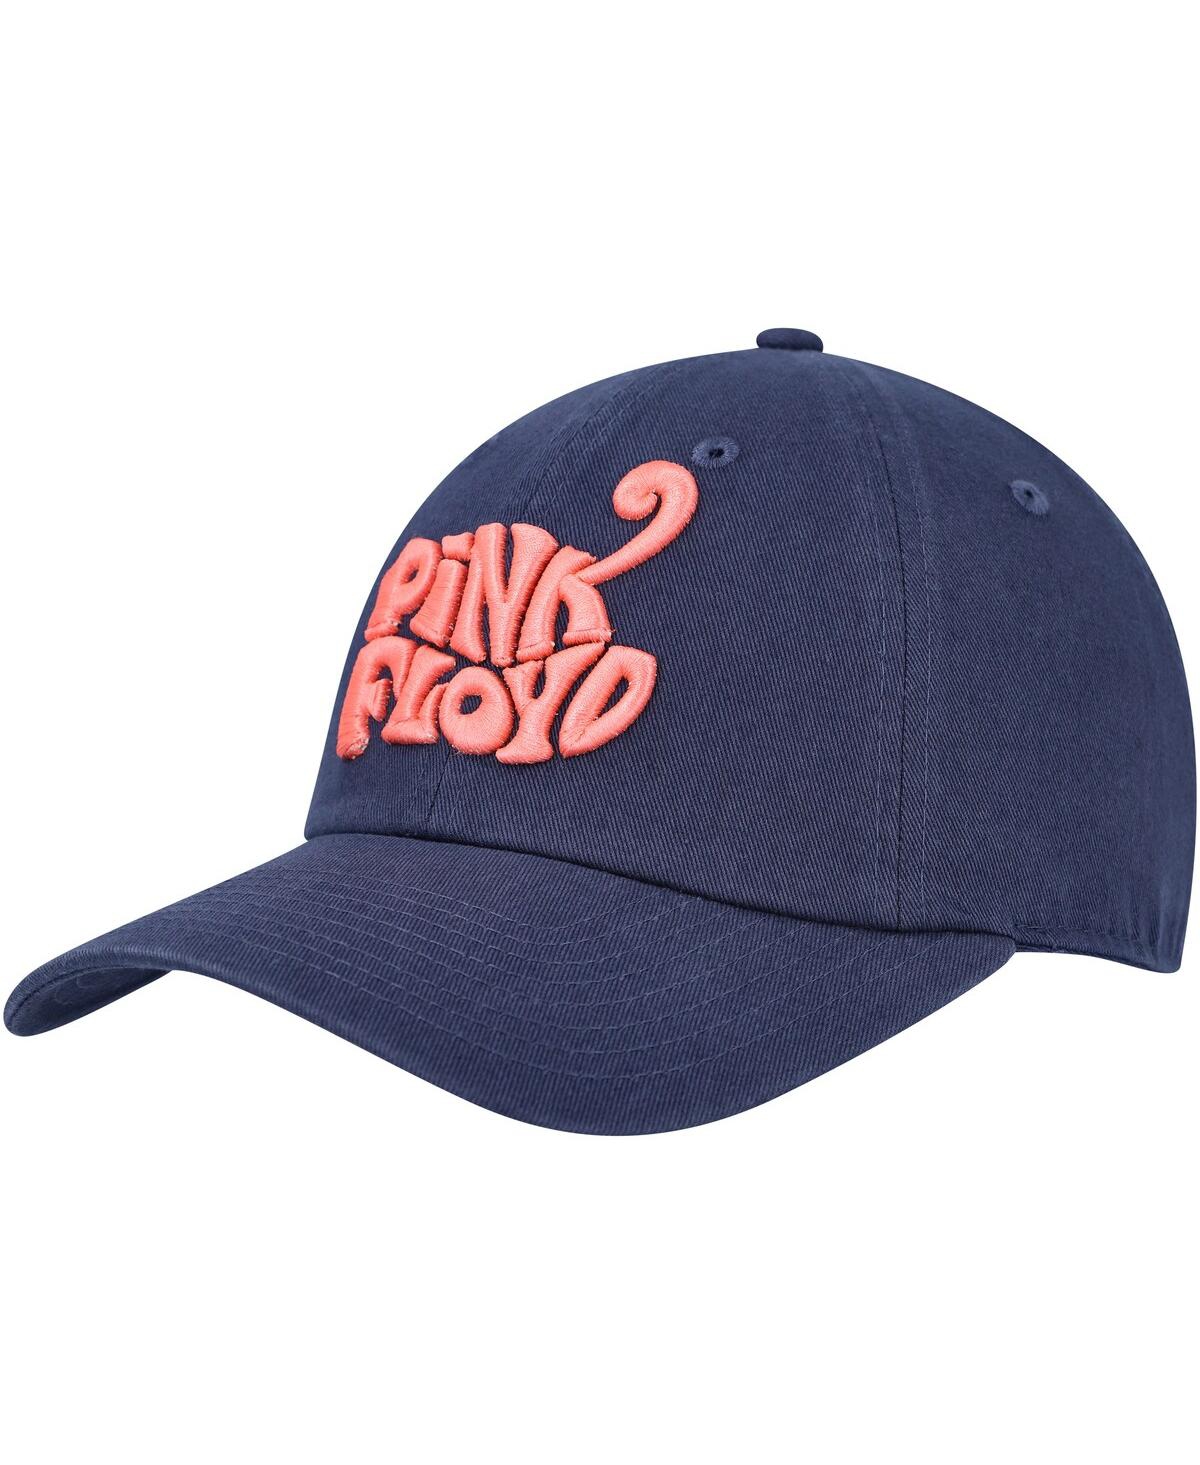 American Needle Men's  Navy Pink Floyd Ballpark Adjustable Hat